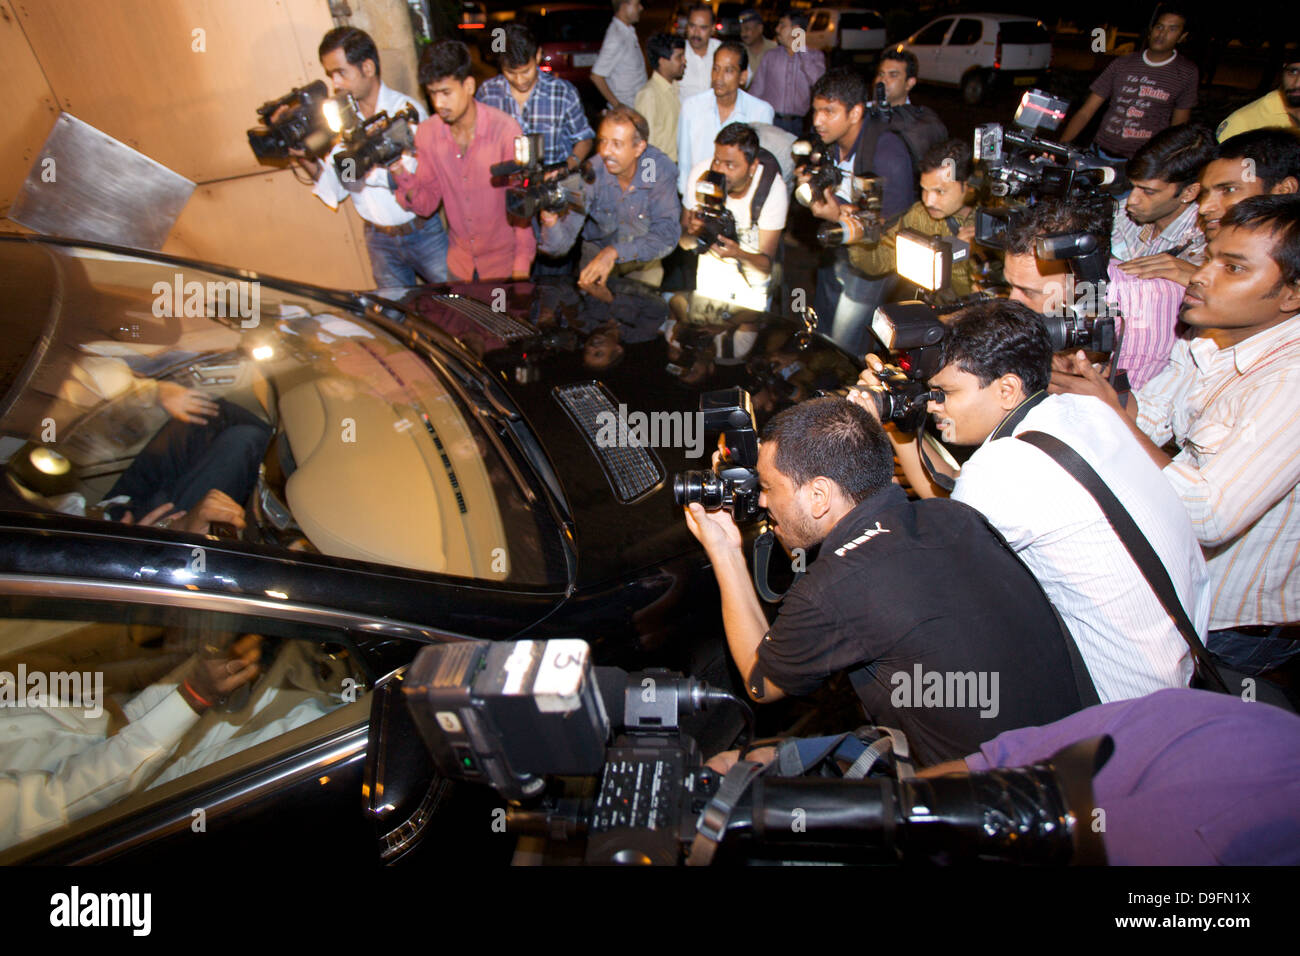 Paparazzi ambushing la vettura di una stella di Bollywood in Mumbai, India. Foto Stock